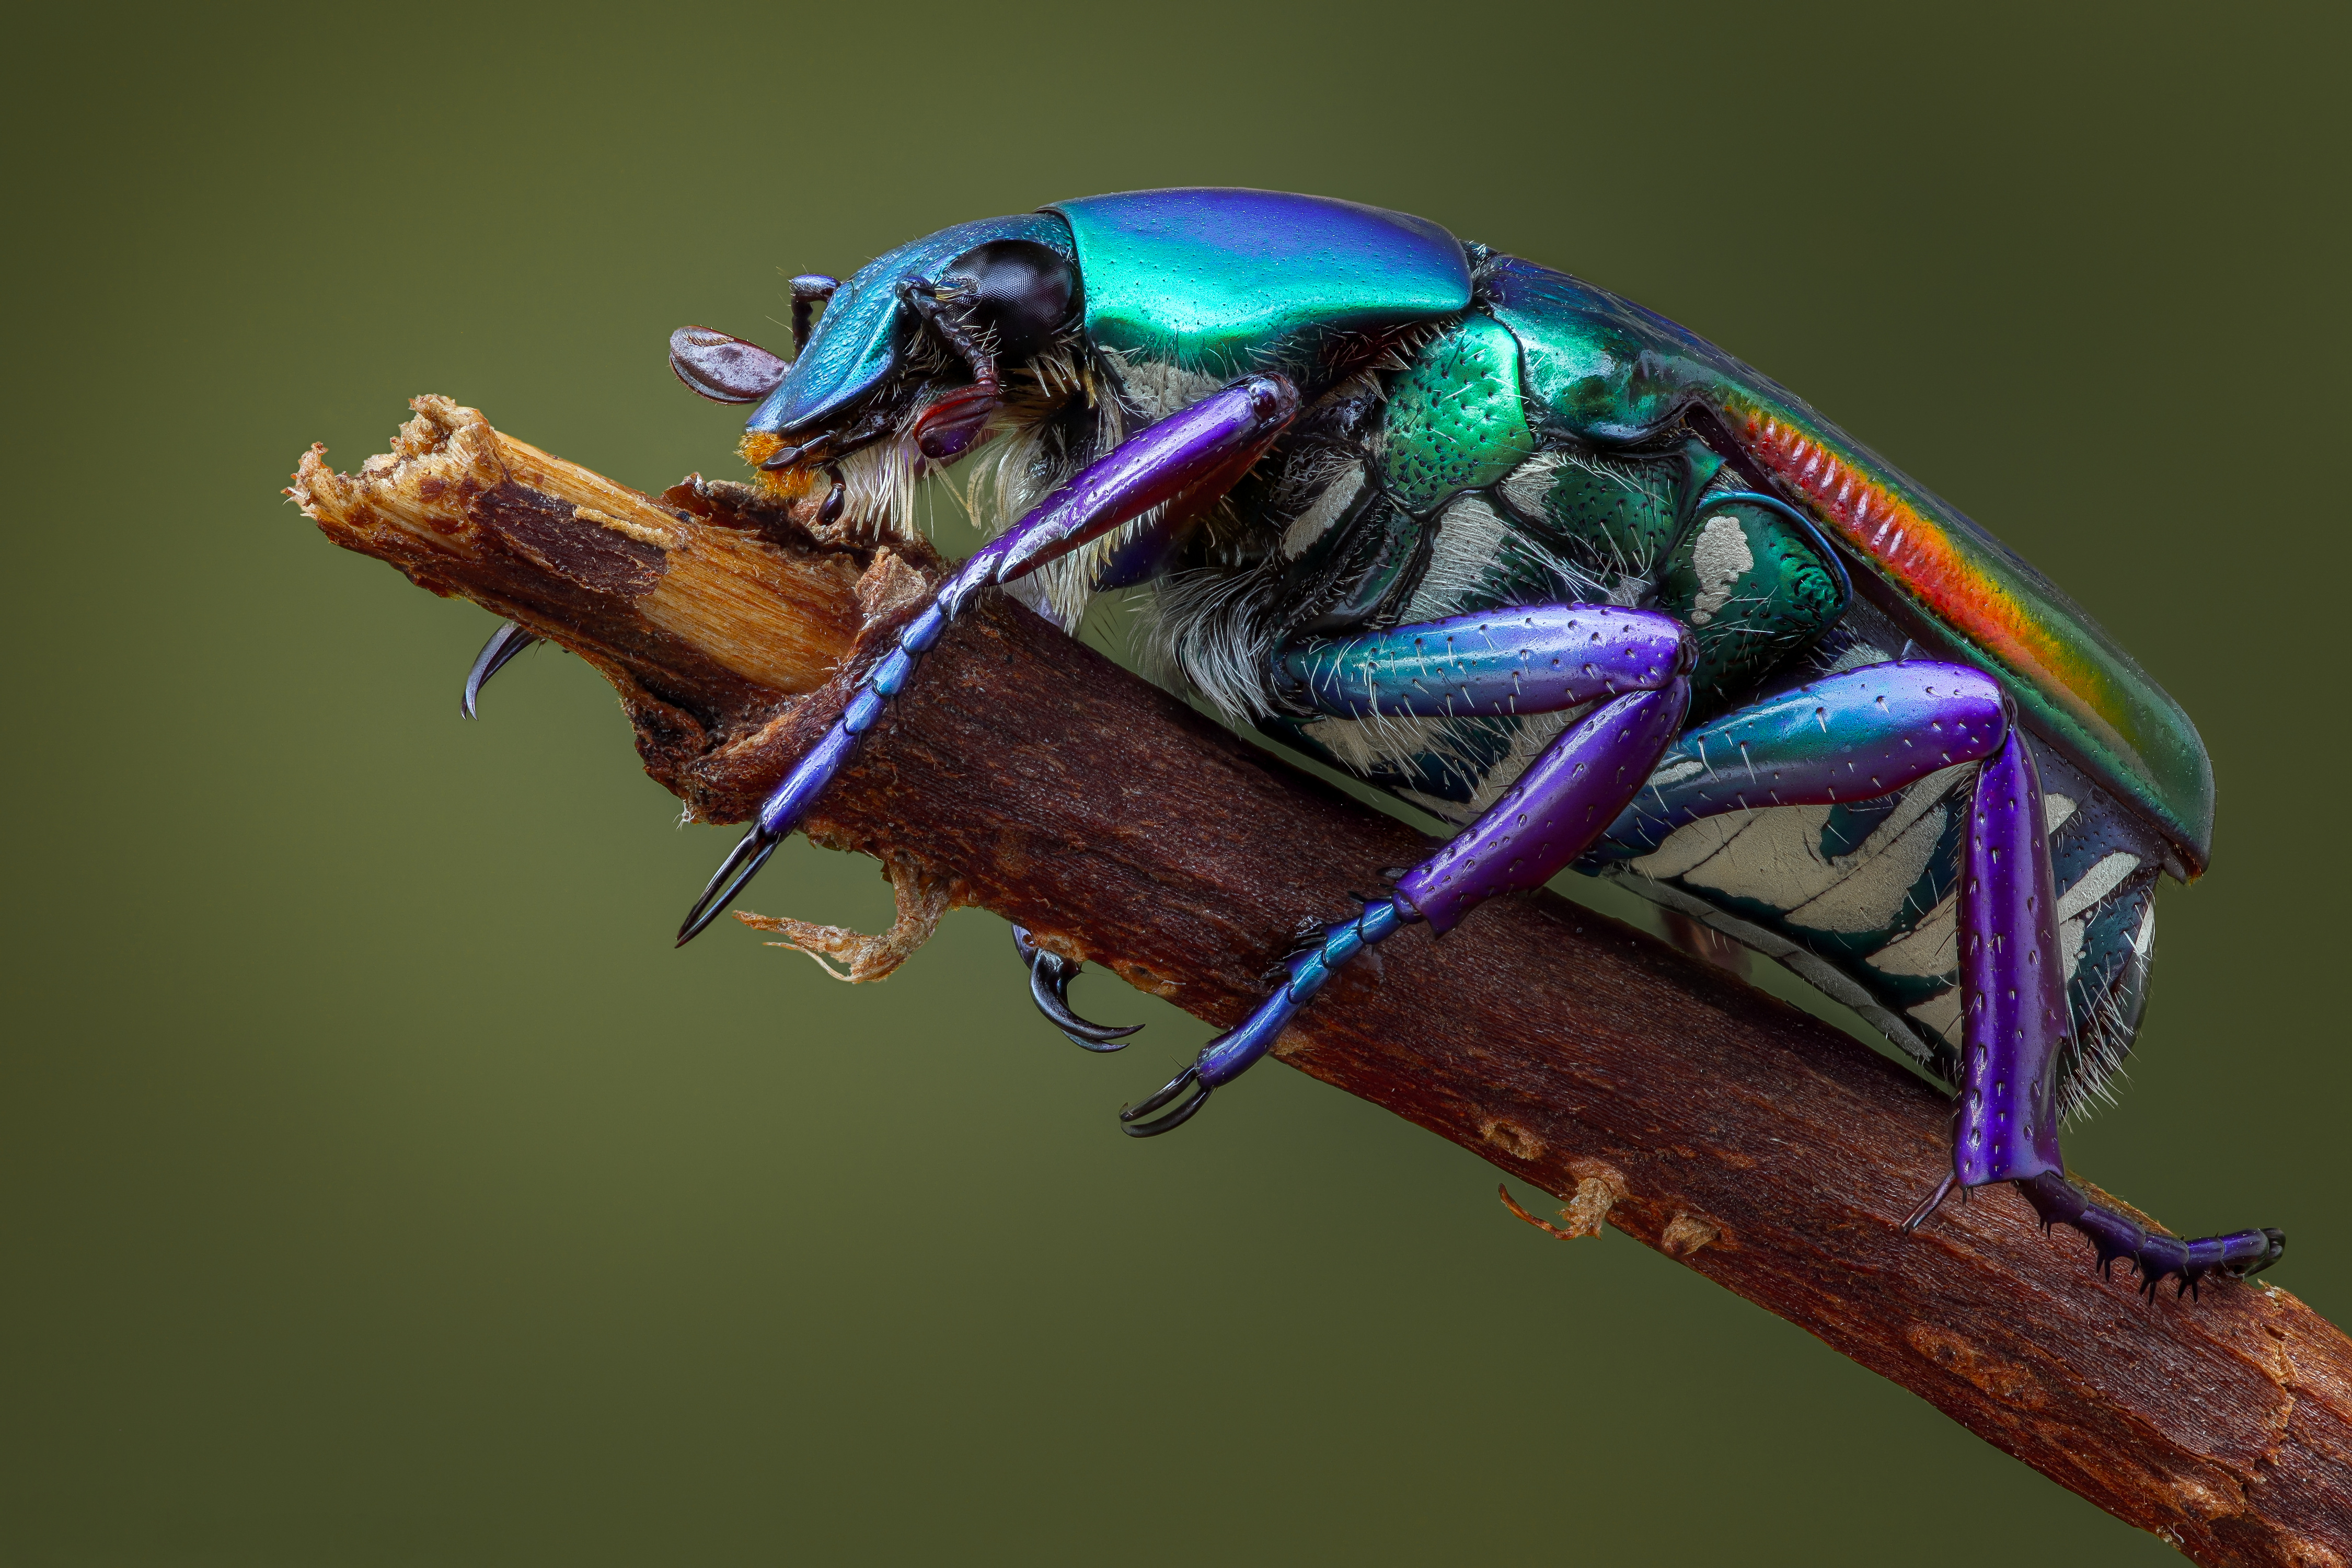 Bilder på skrivbordet Insekter Skalbaggar pygora sanguineomarginata Djur Närbild 4500x3000 skalbagge